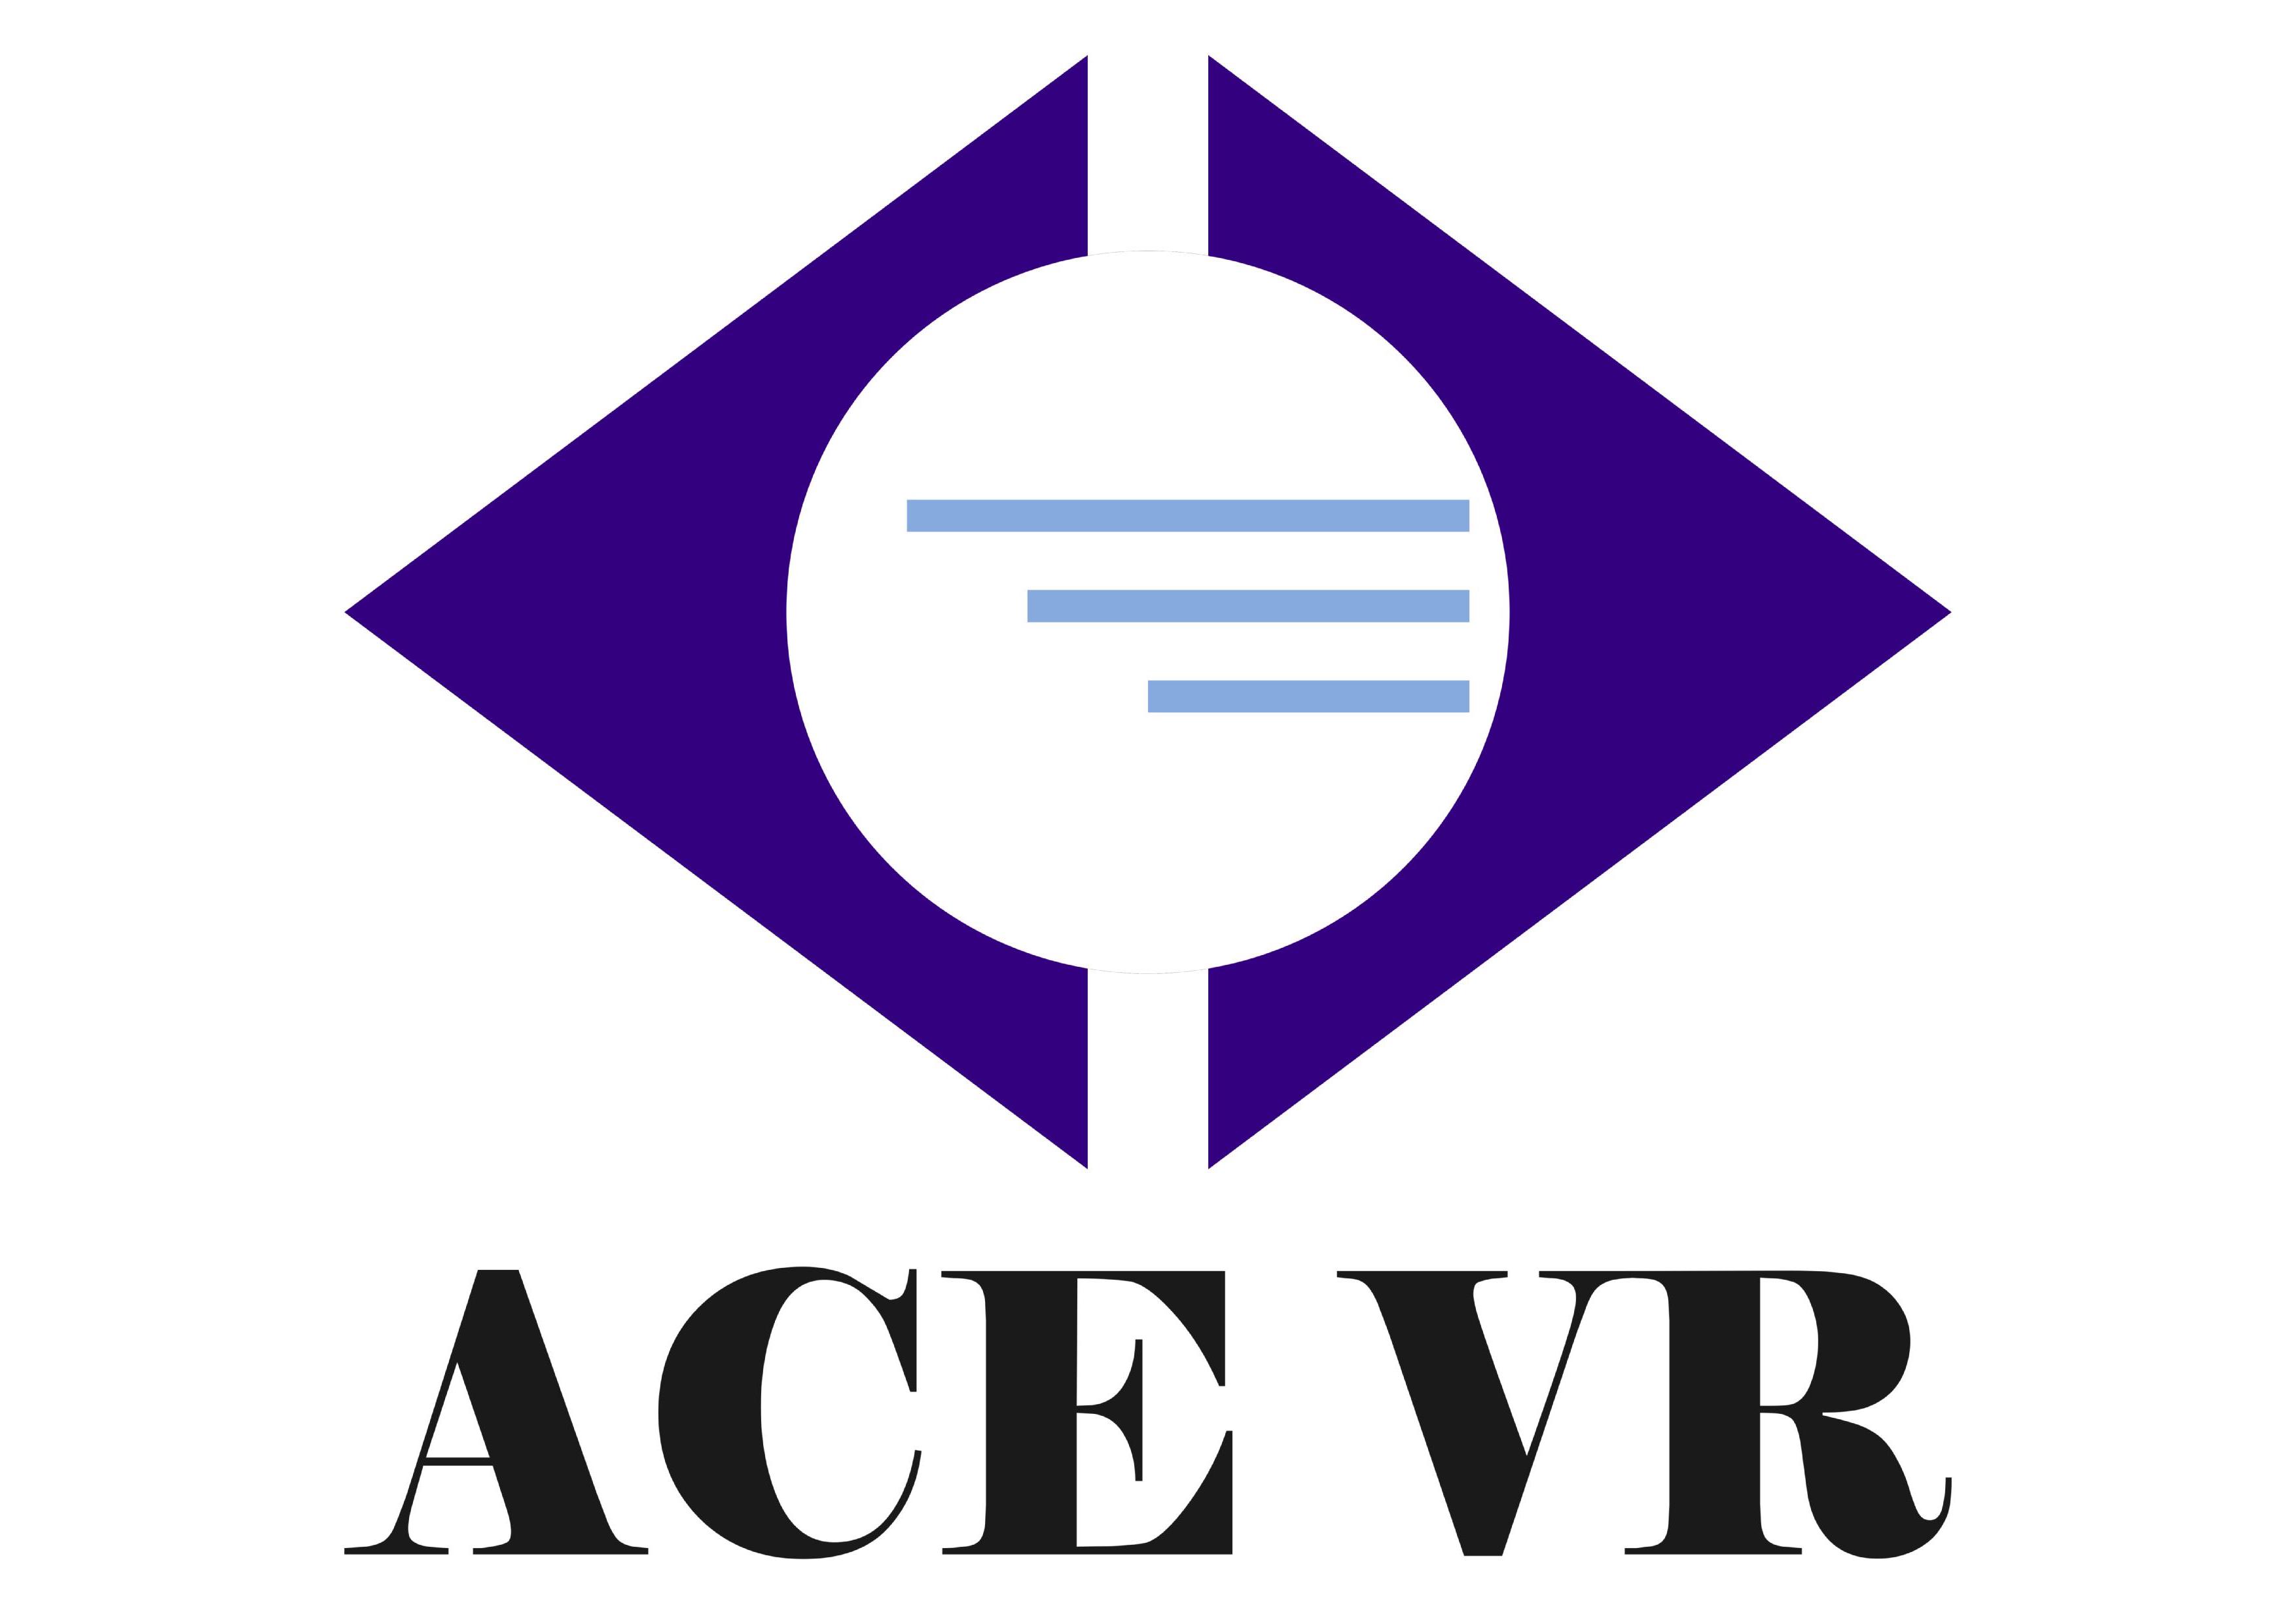 ACE VR Ltd